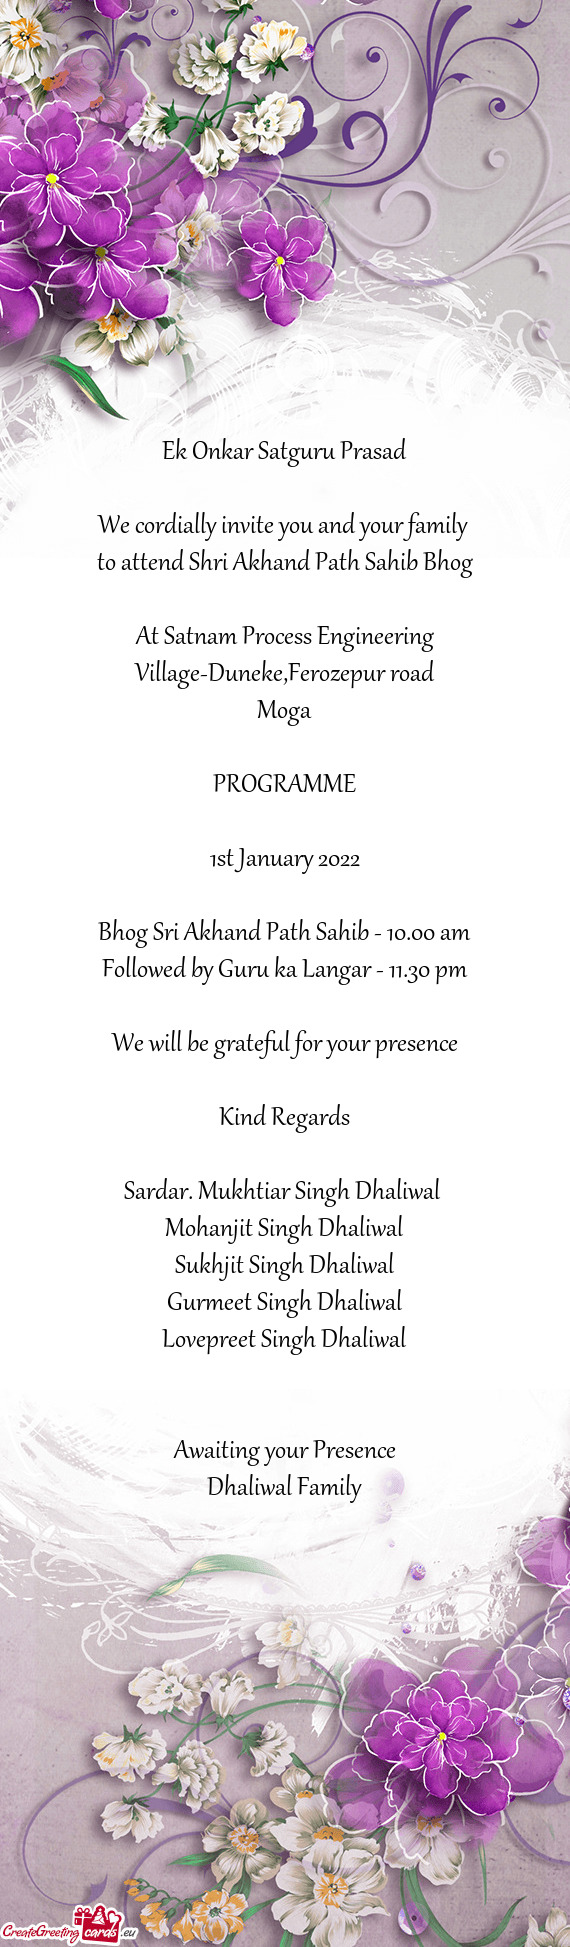 Bhog Sri Akhand Path Sahib - 10.00 am